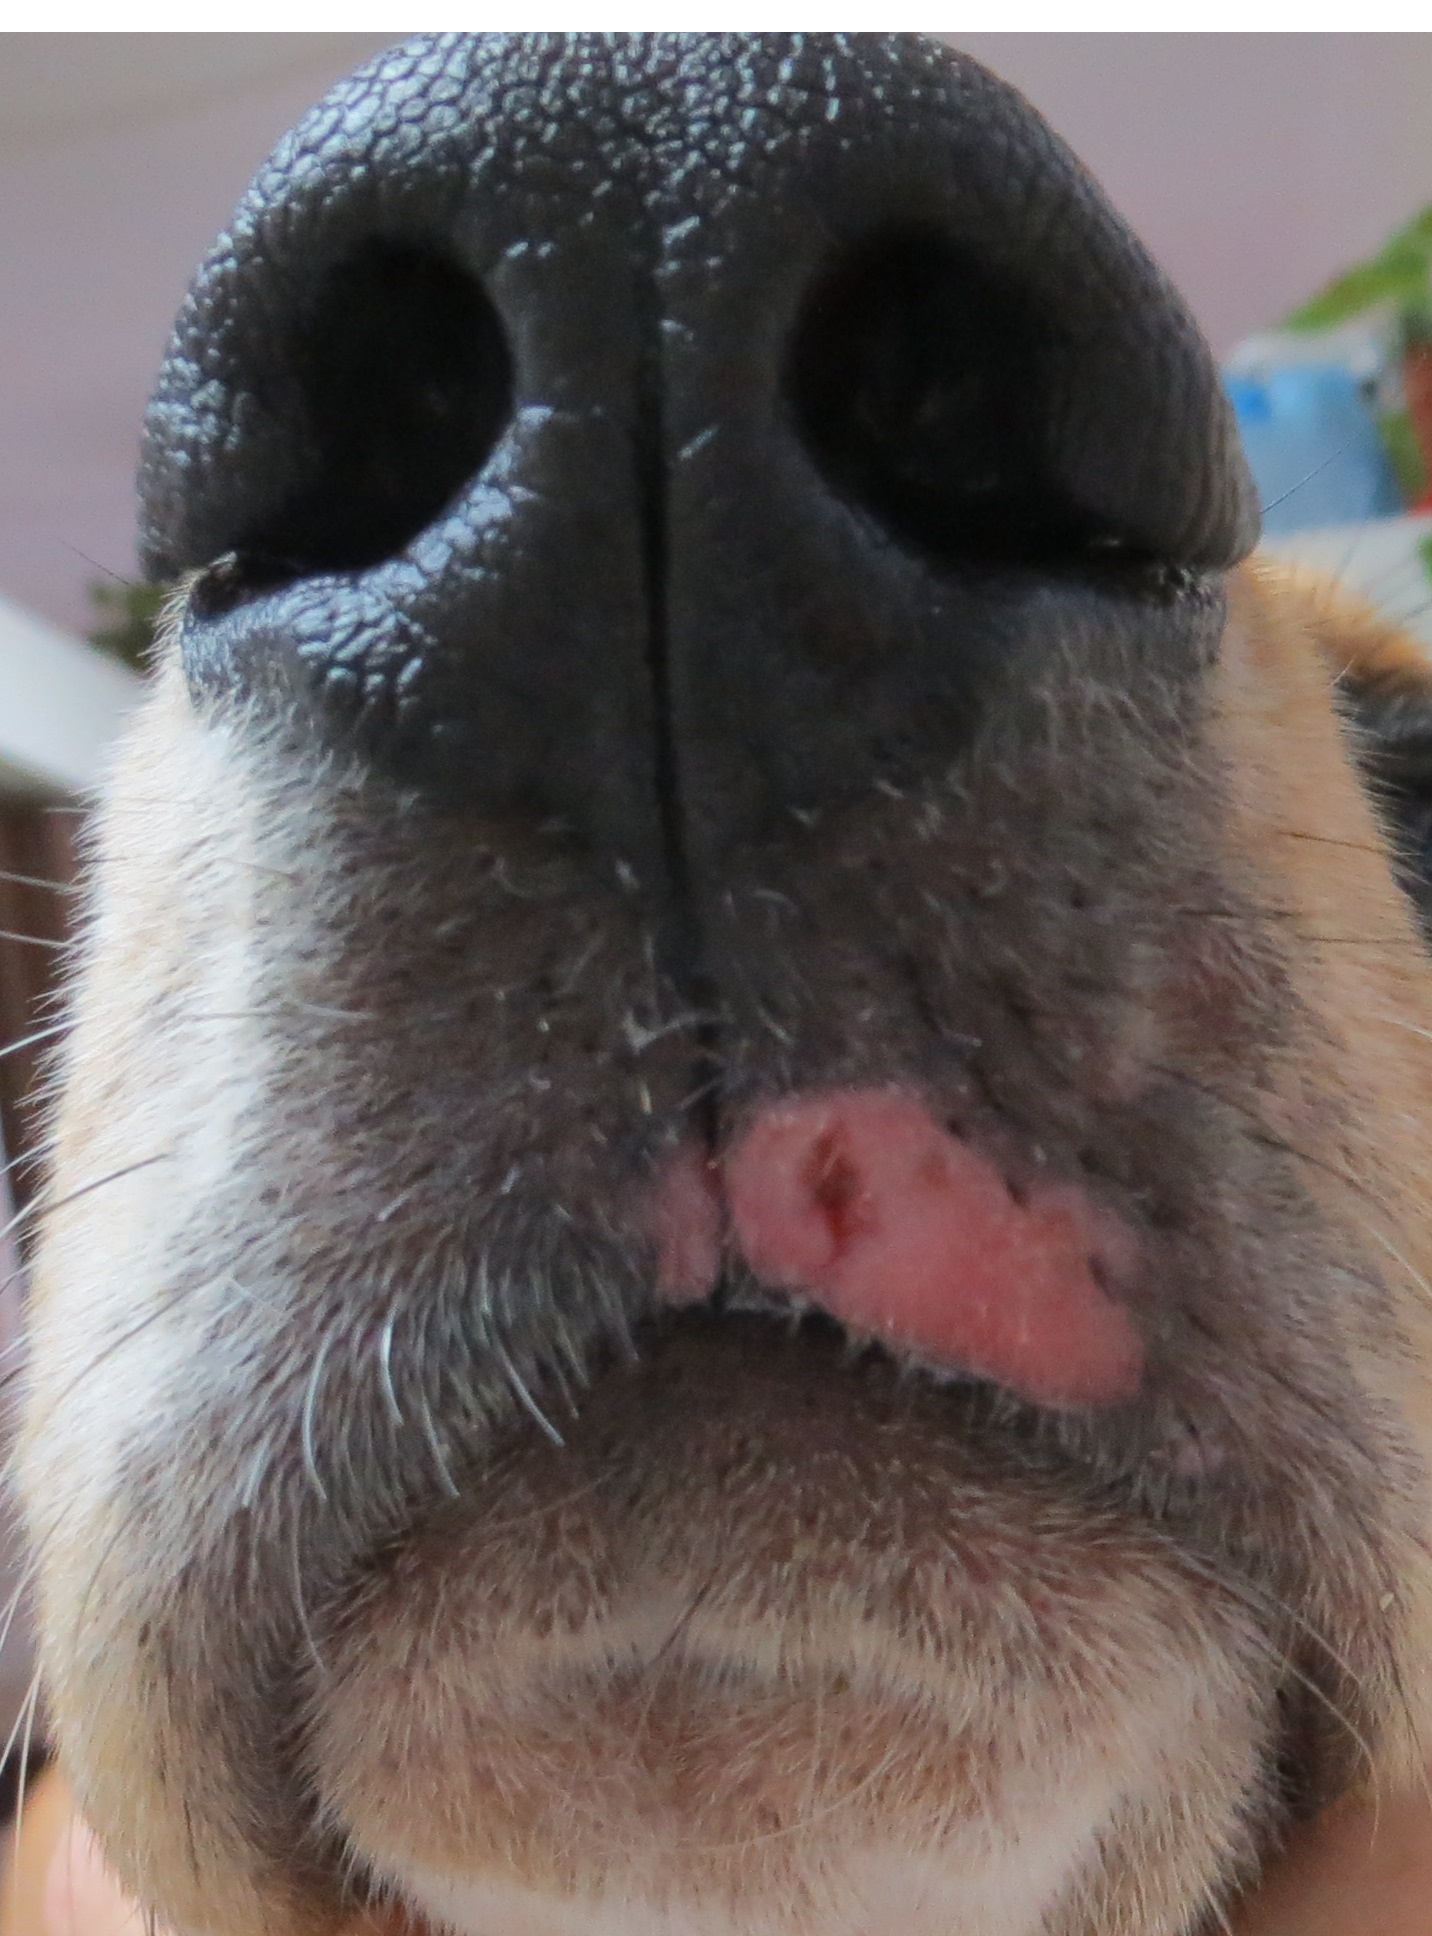 tratamiento de papilomatosis canina